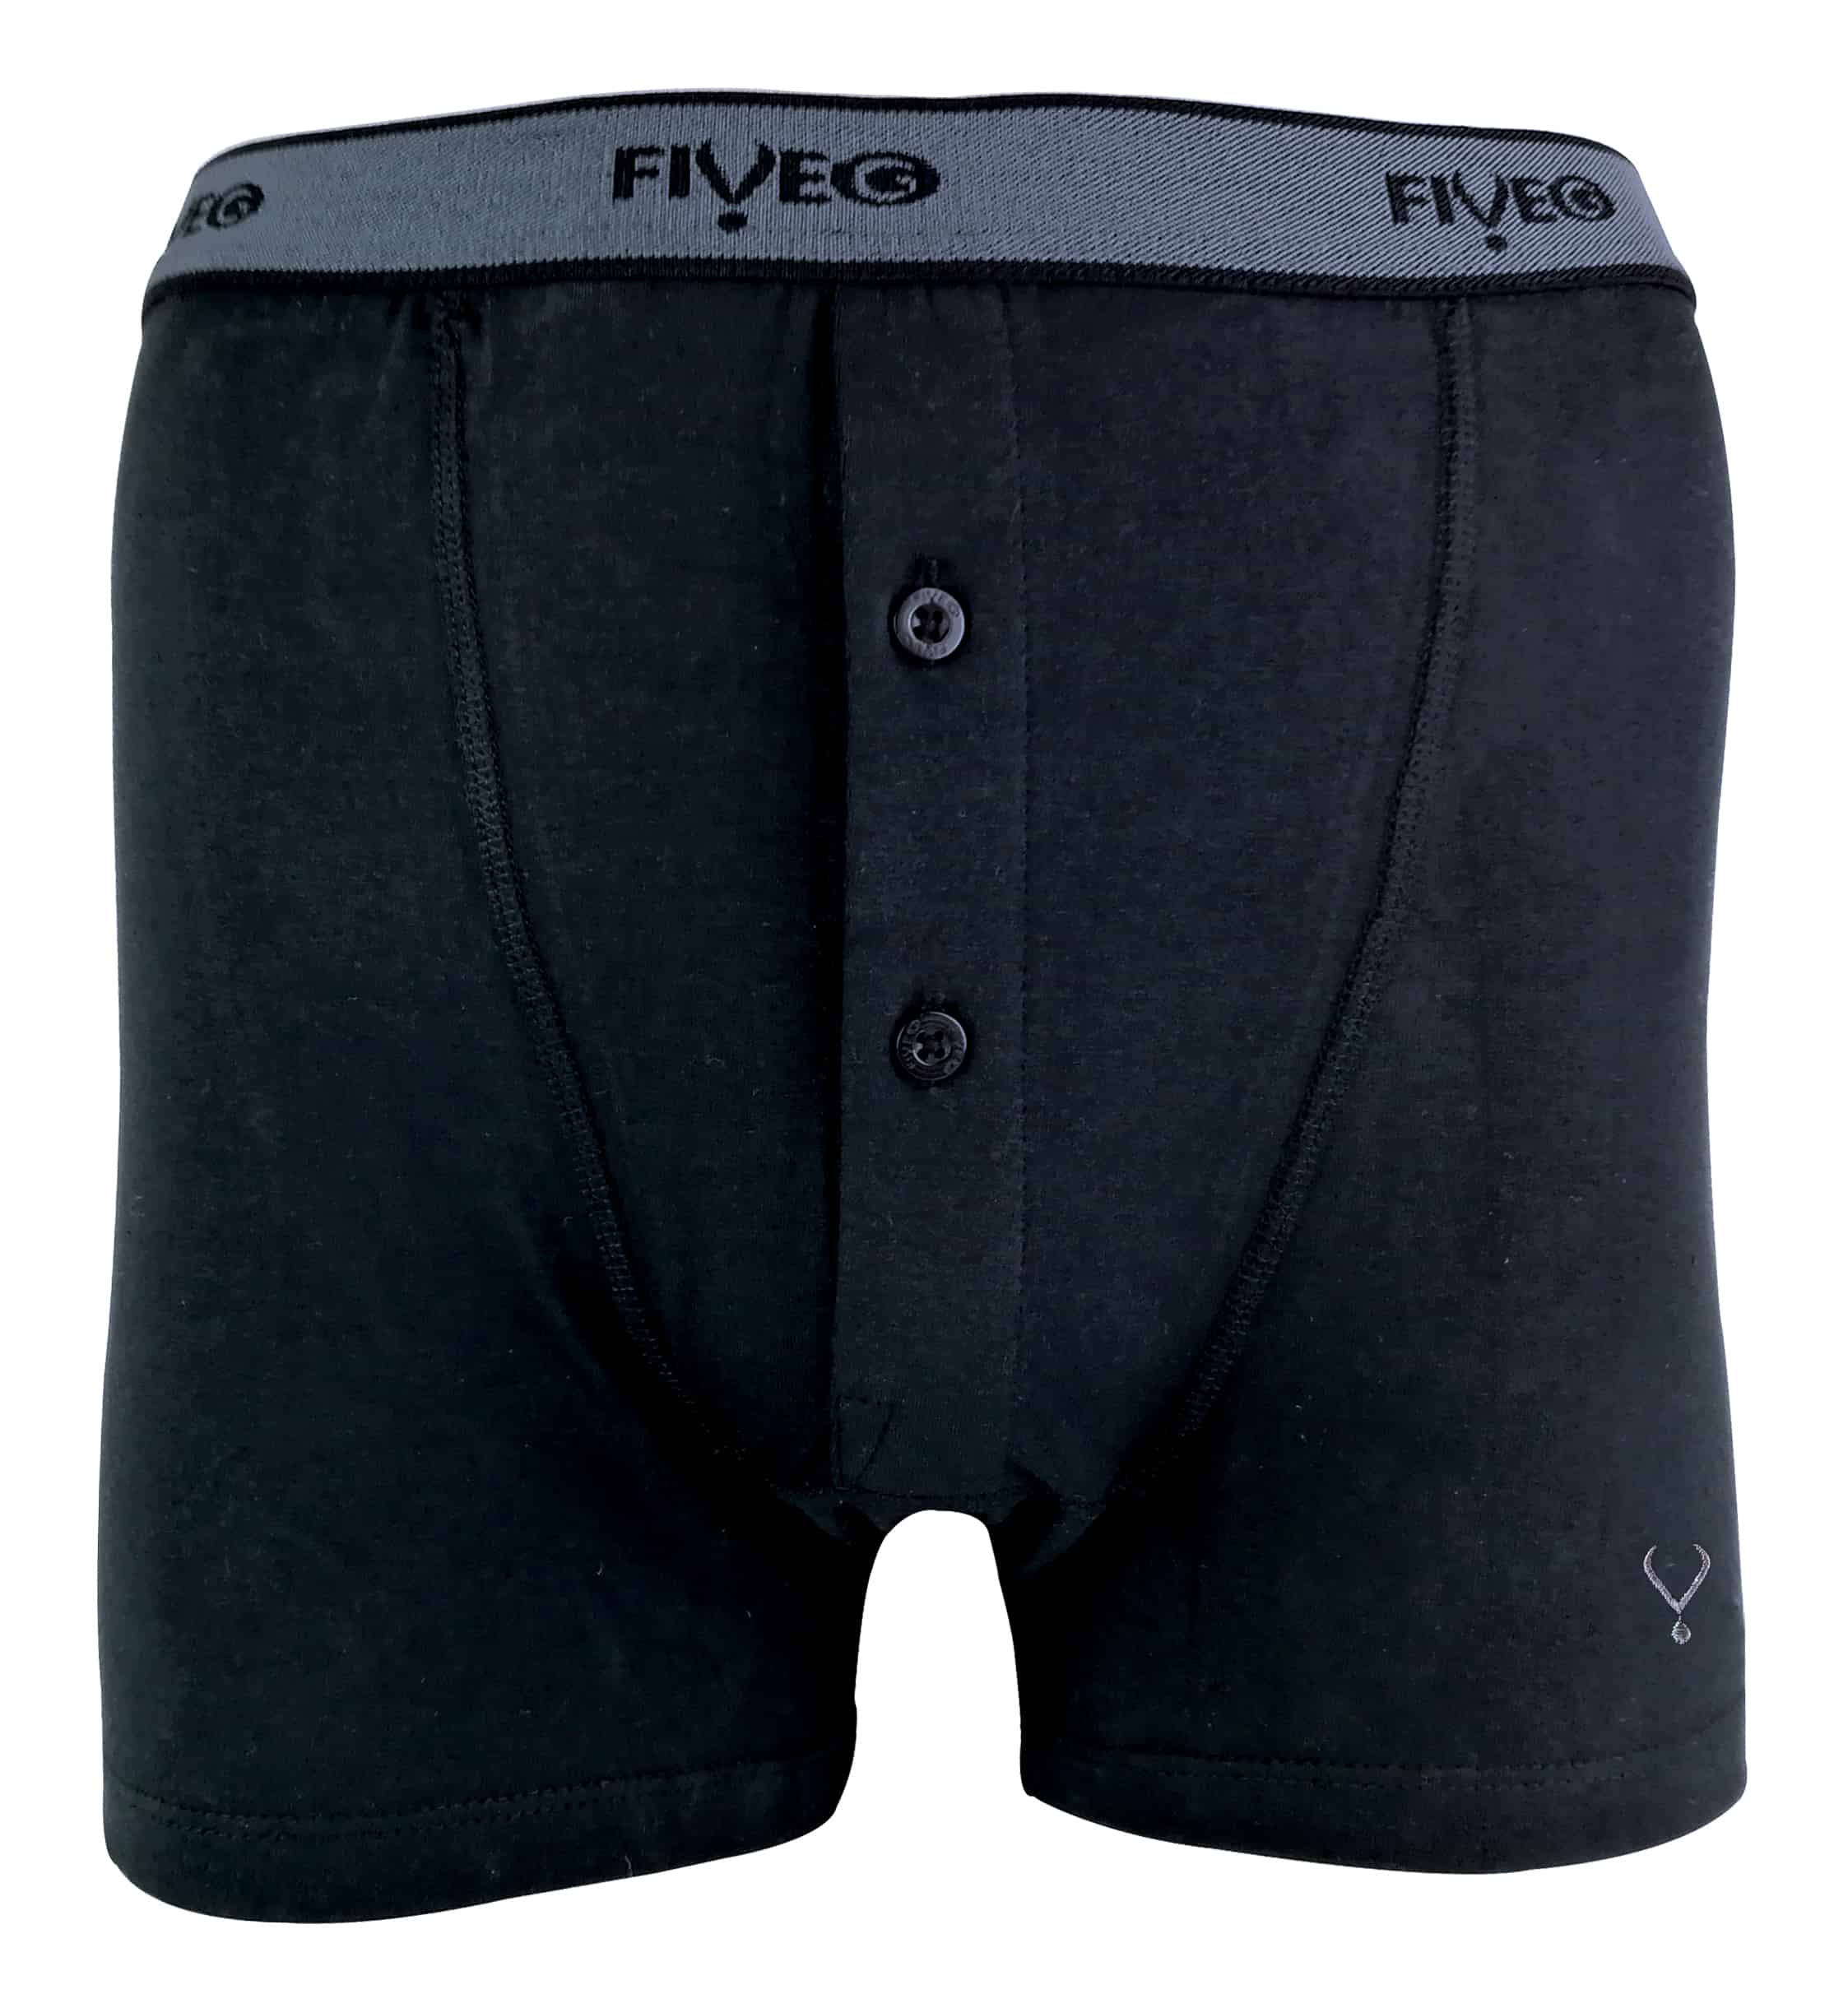 Fiveg 2 Pack Mens Breathable Button Fly Cotton Rich Underwear Boxershorts Sock Snob